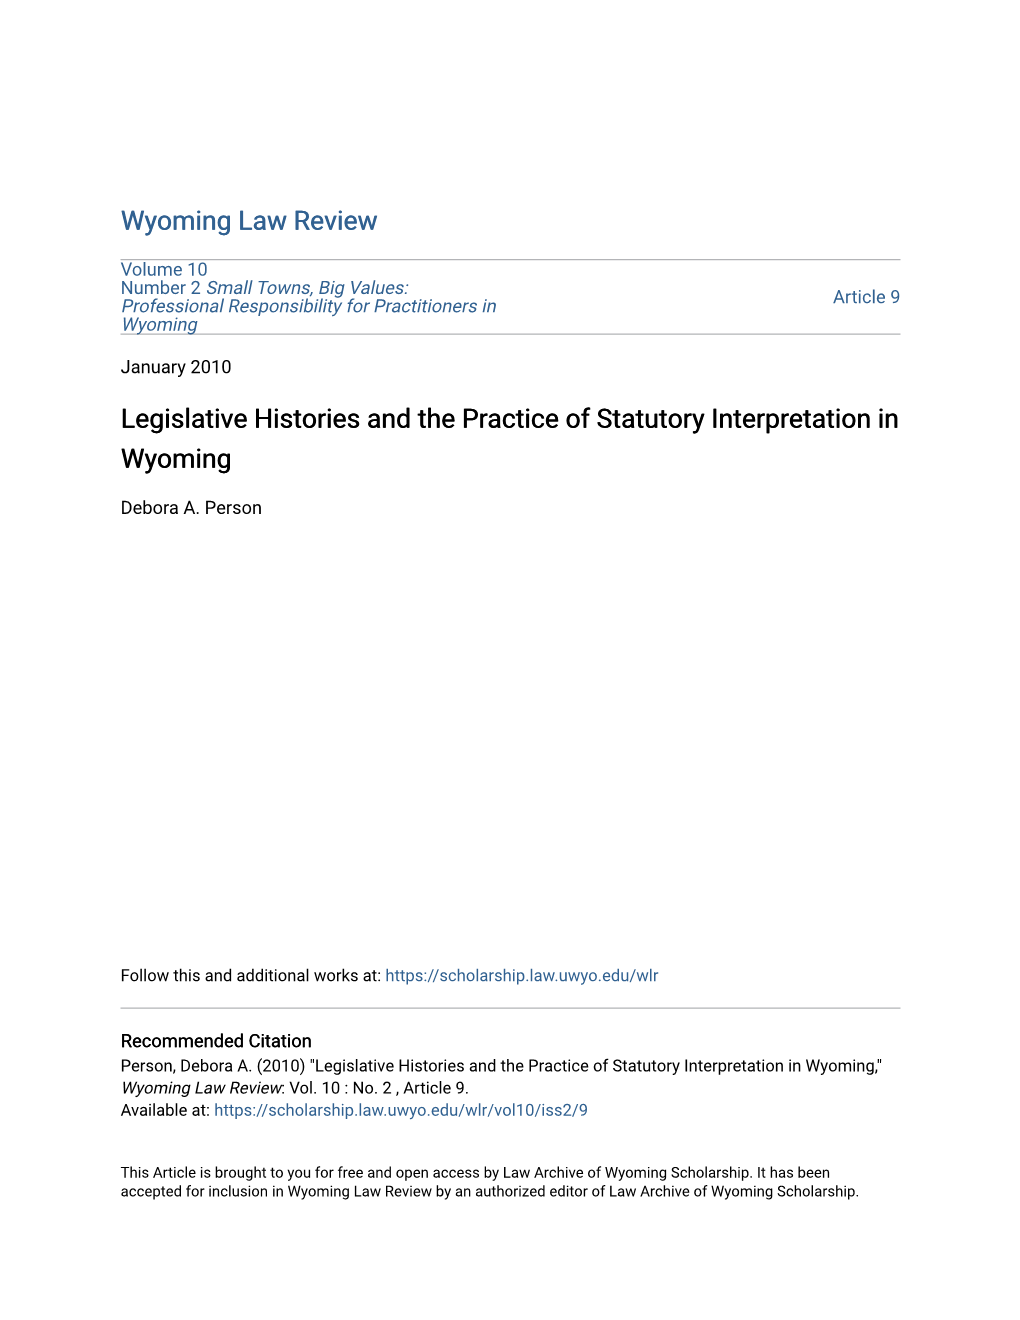 Legislative Histories and the Practice of Statutory Interpretation in Wyoming